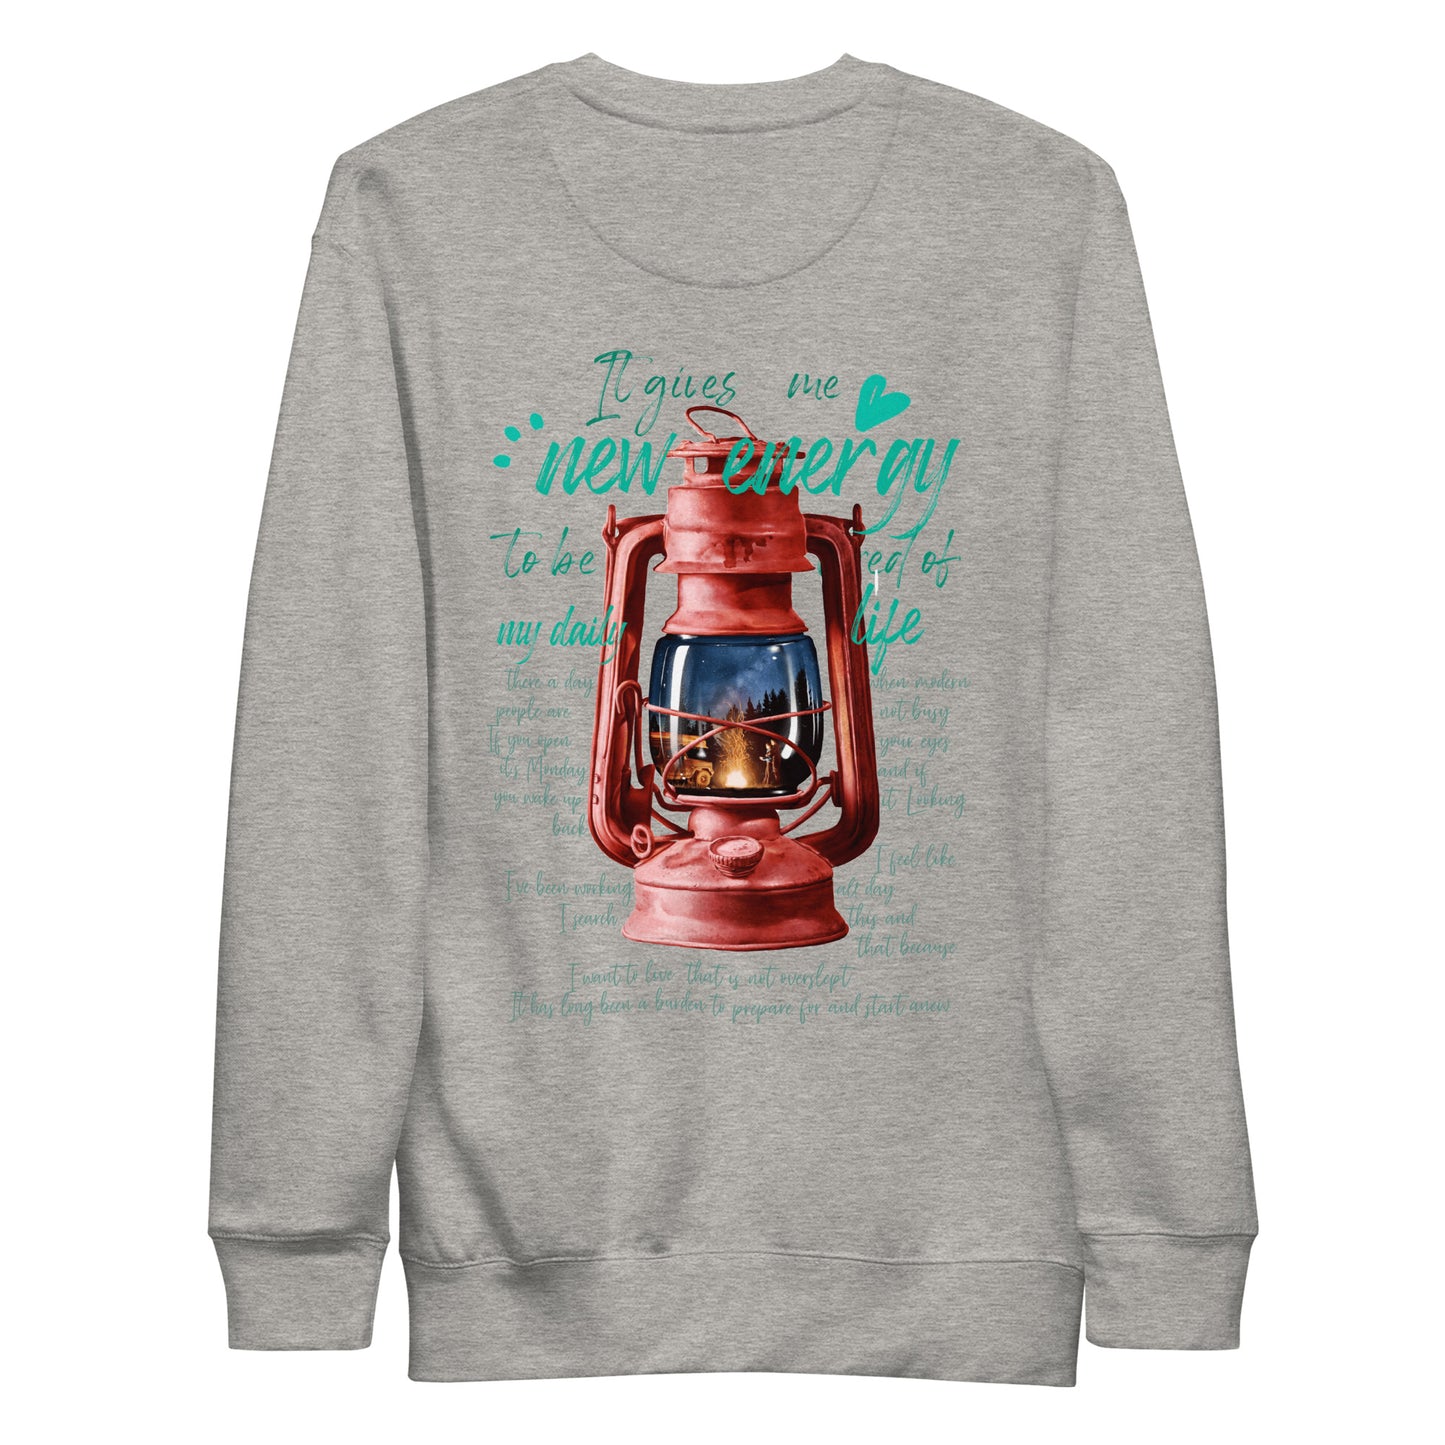 Camp lantern Unisex Premium Sweatshirt